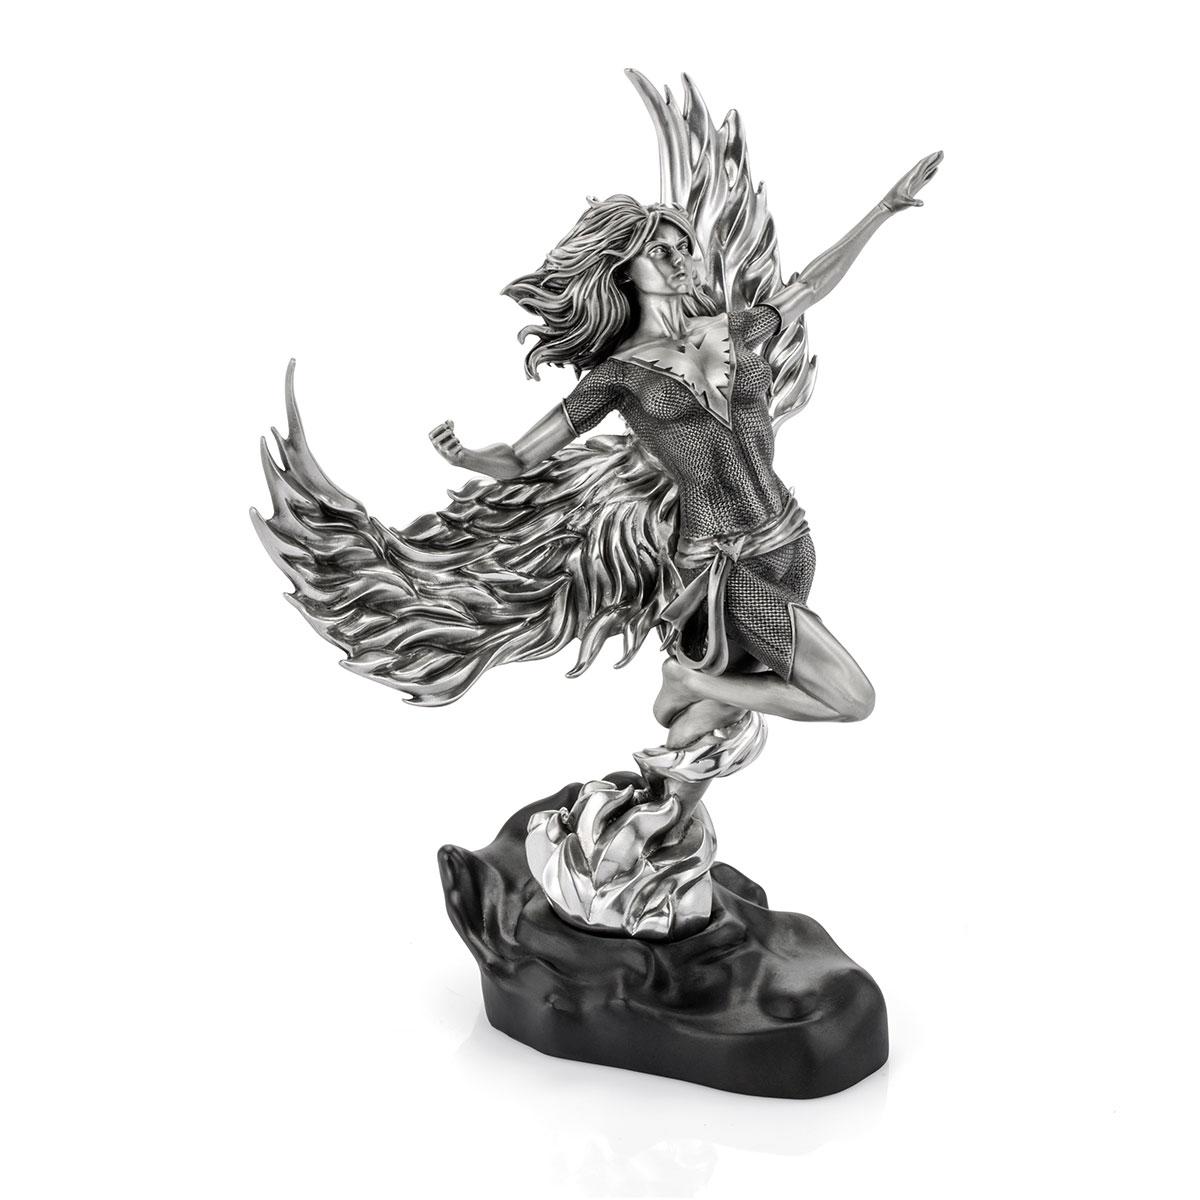 Limited Edition Phoenix Arising Figurine